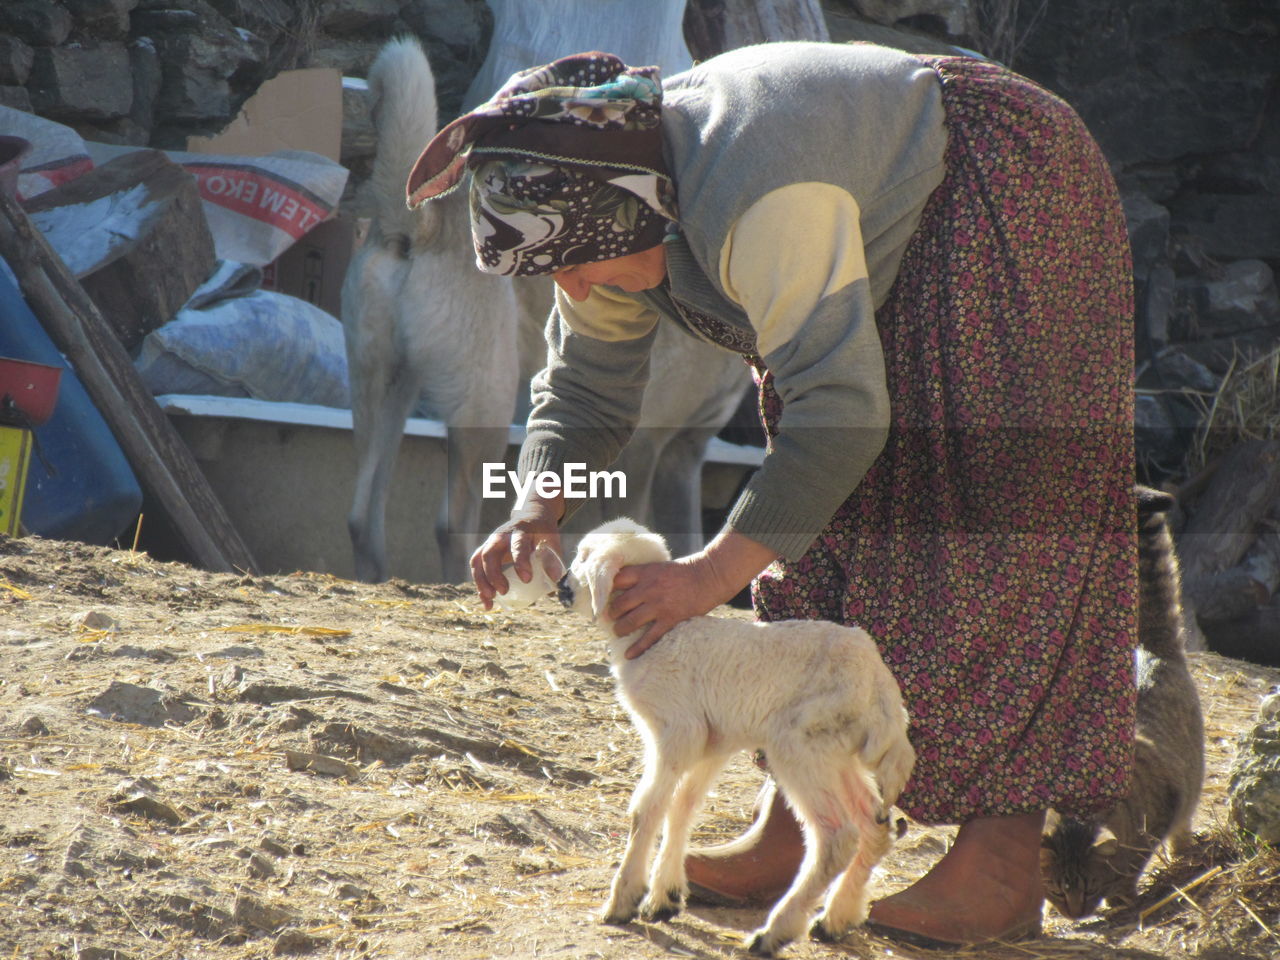 Woman feeding kid goat with milk at farm